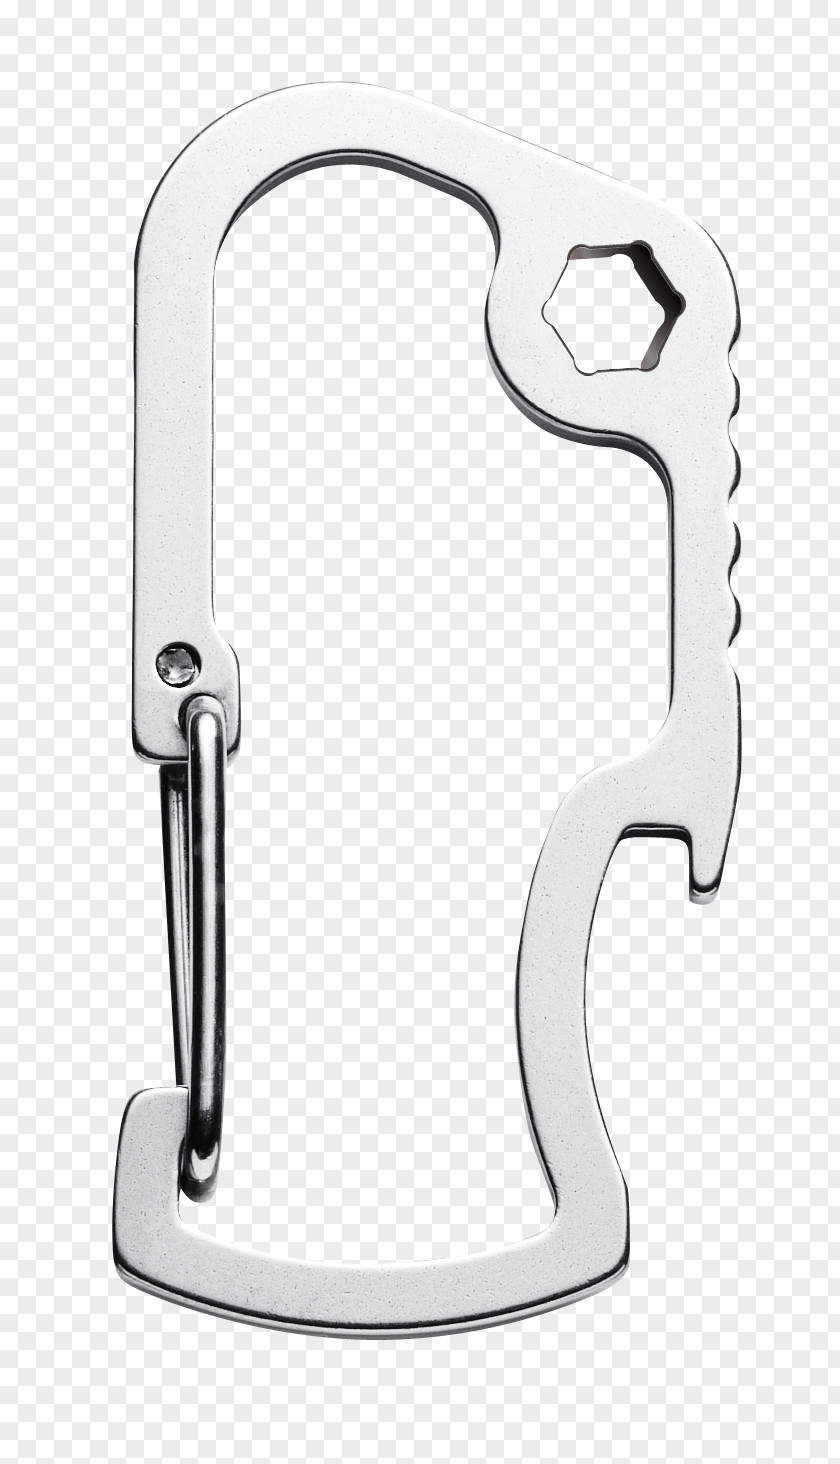 Sharpener Multi-function Tools & Knives Leatherman Carabiner Bottle Openers Knife PNG